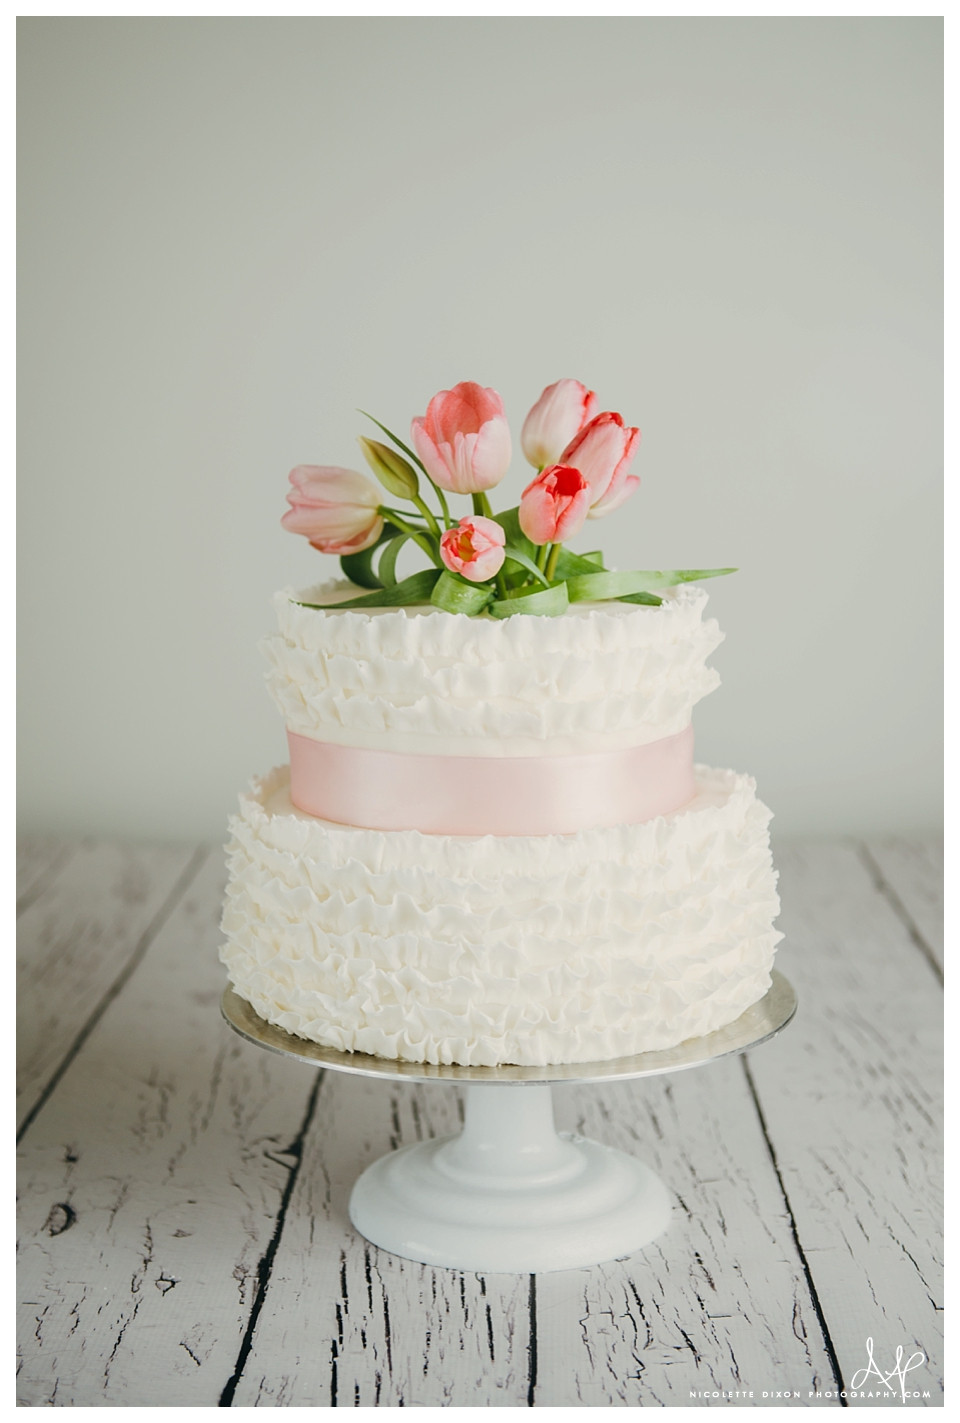 Birthday Party Ideas Lincoln Ne
 Lincoln Nebraska Wedding Cakes S’more Cake Spring Fondant